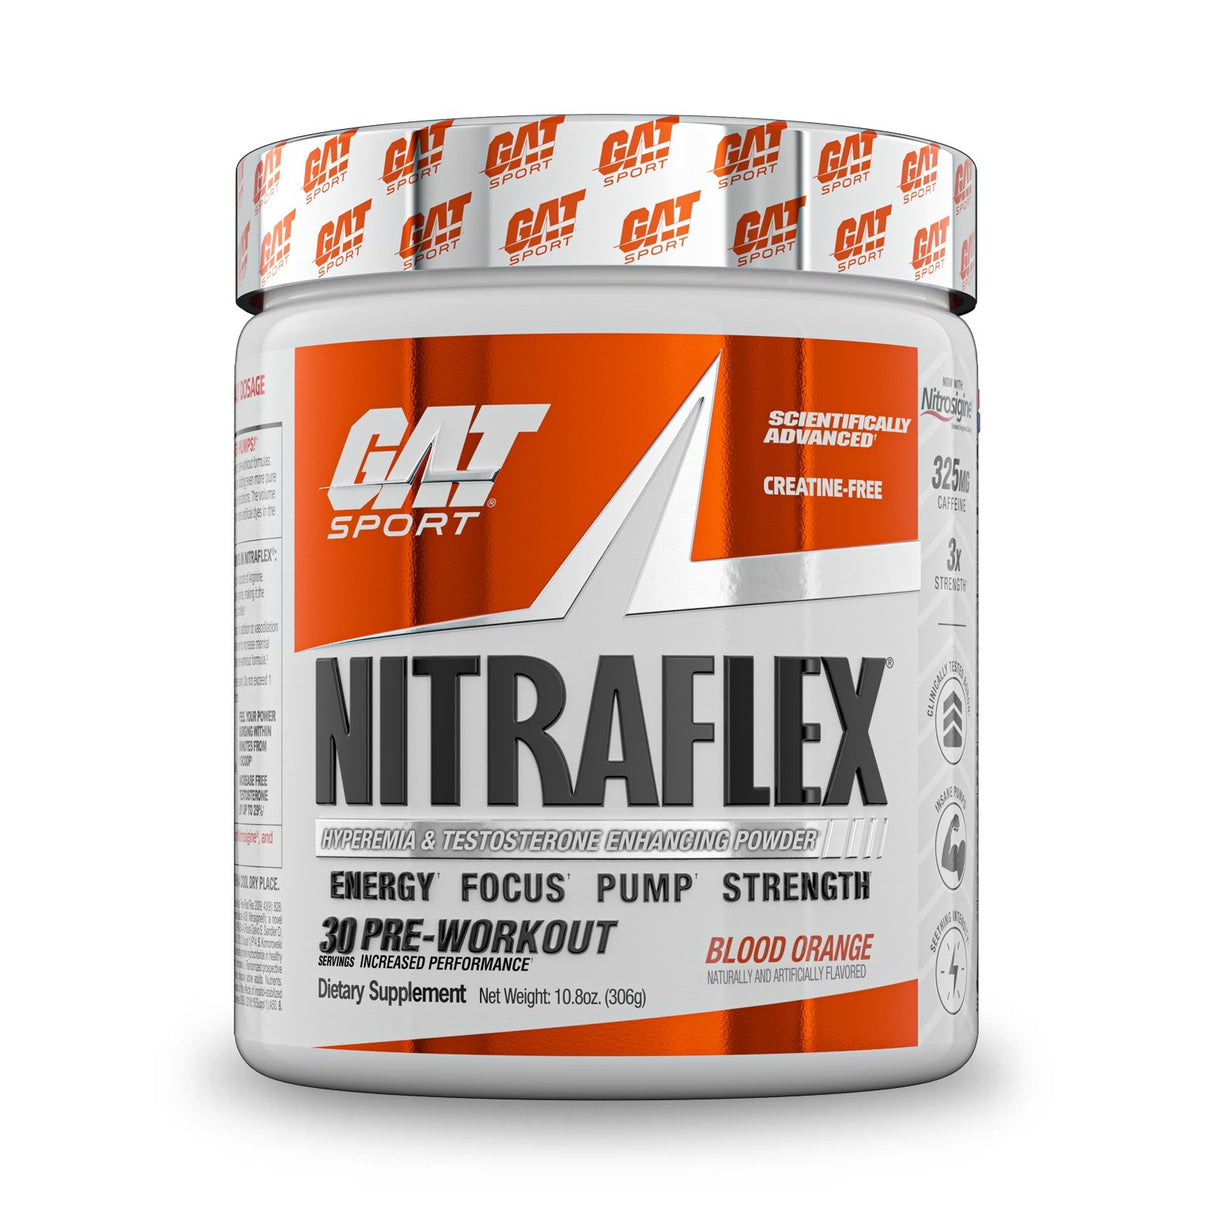 GAT SPORT NITRAFLEX ADVANCED Pre-Workout - blood orange